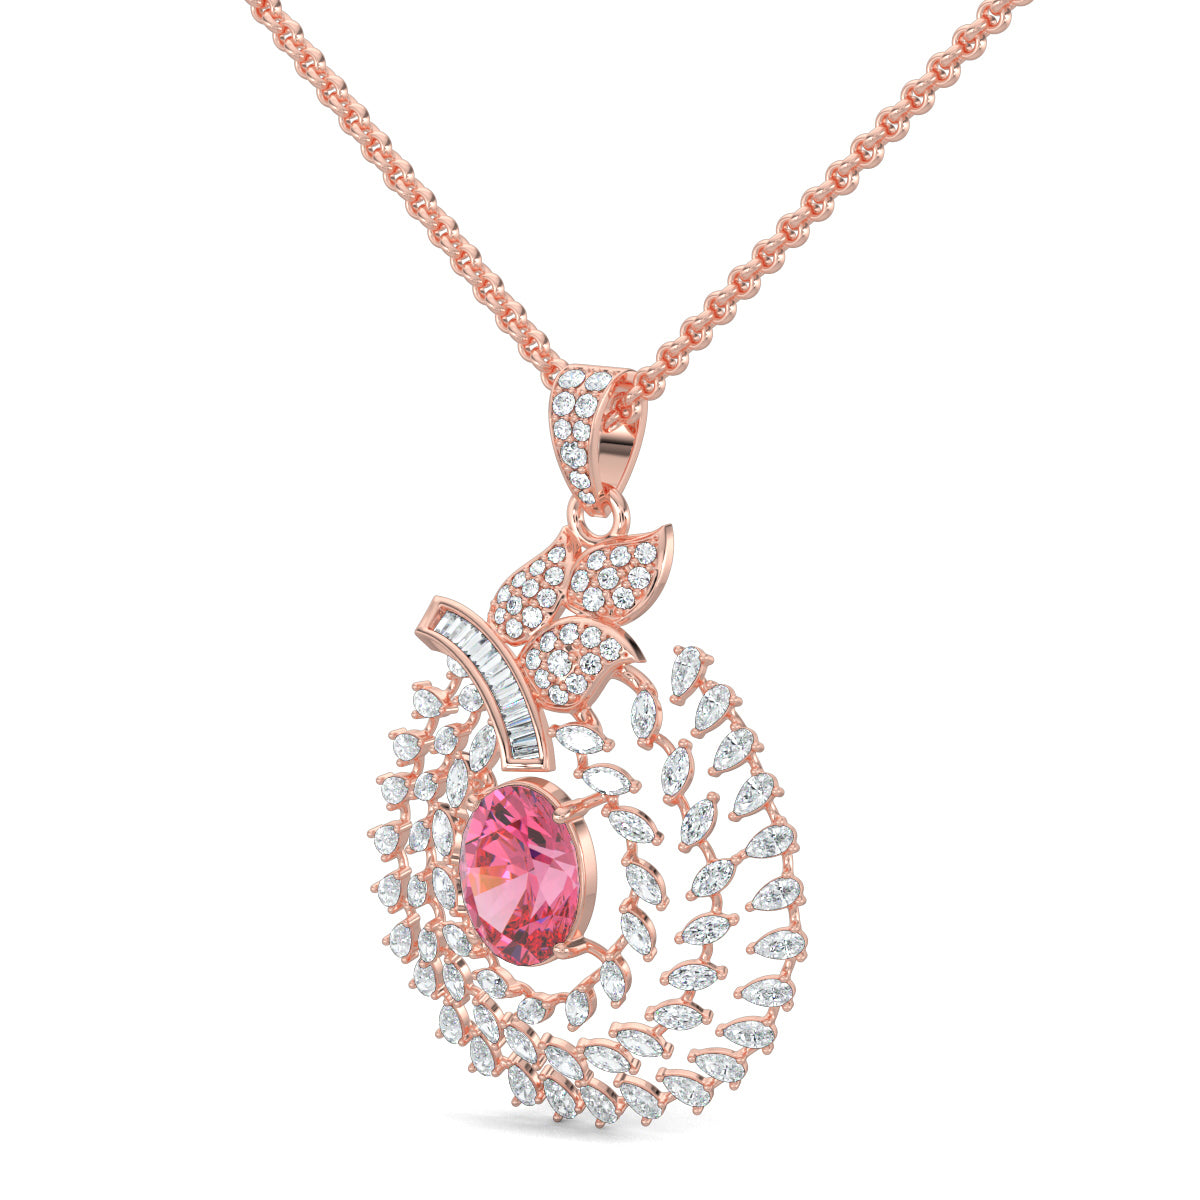 Rose Gold, Diamond Pendants, Graceful Contours Diamond Pendant, Natural Diamonds, Lab-Grown Diamonds, Traditional Design, Oval Pendant, Elegant Jewelry